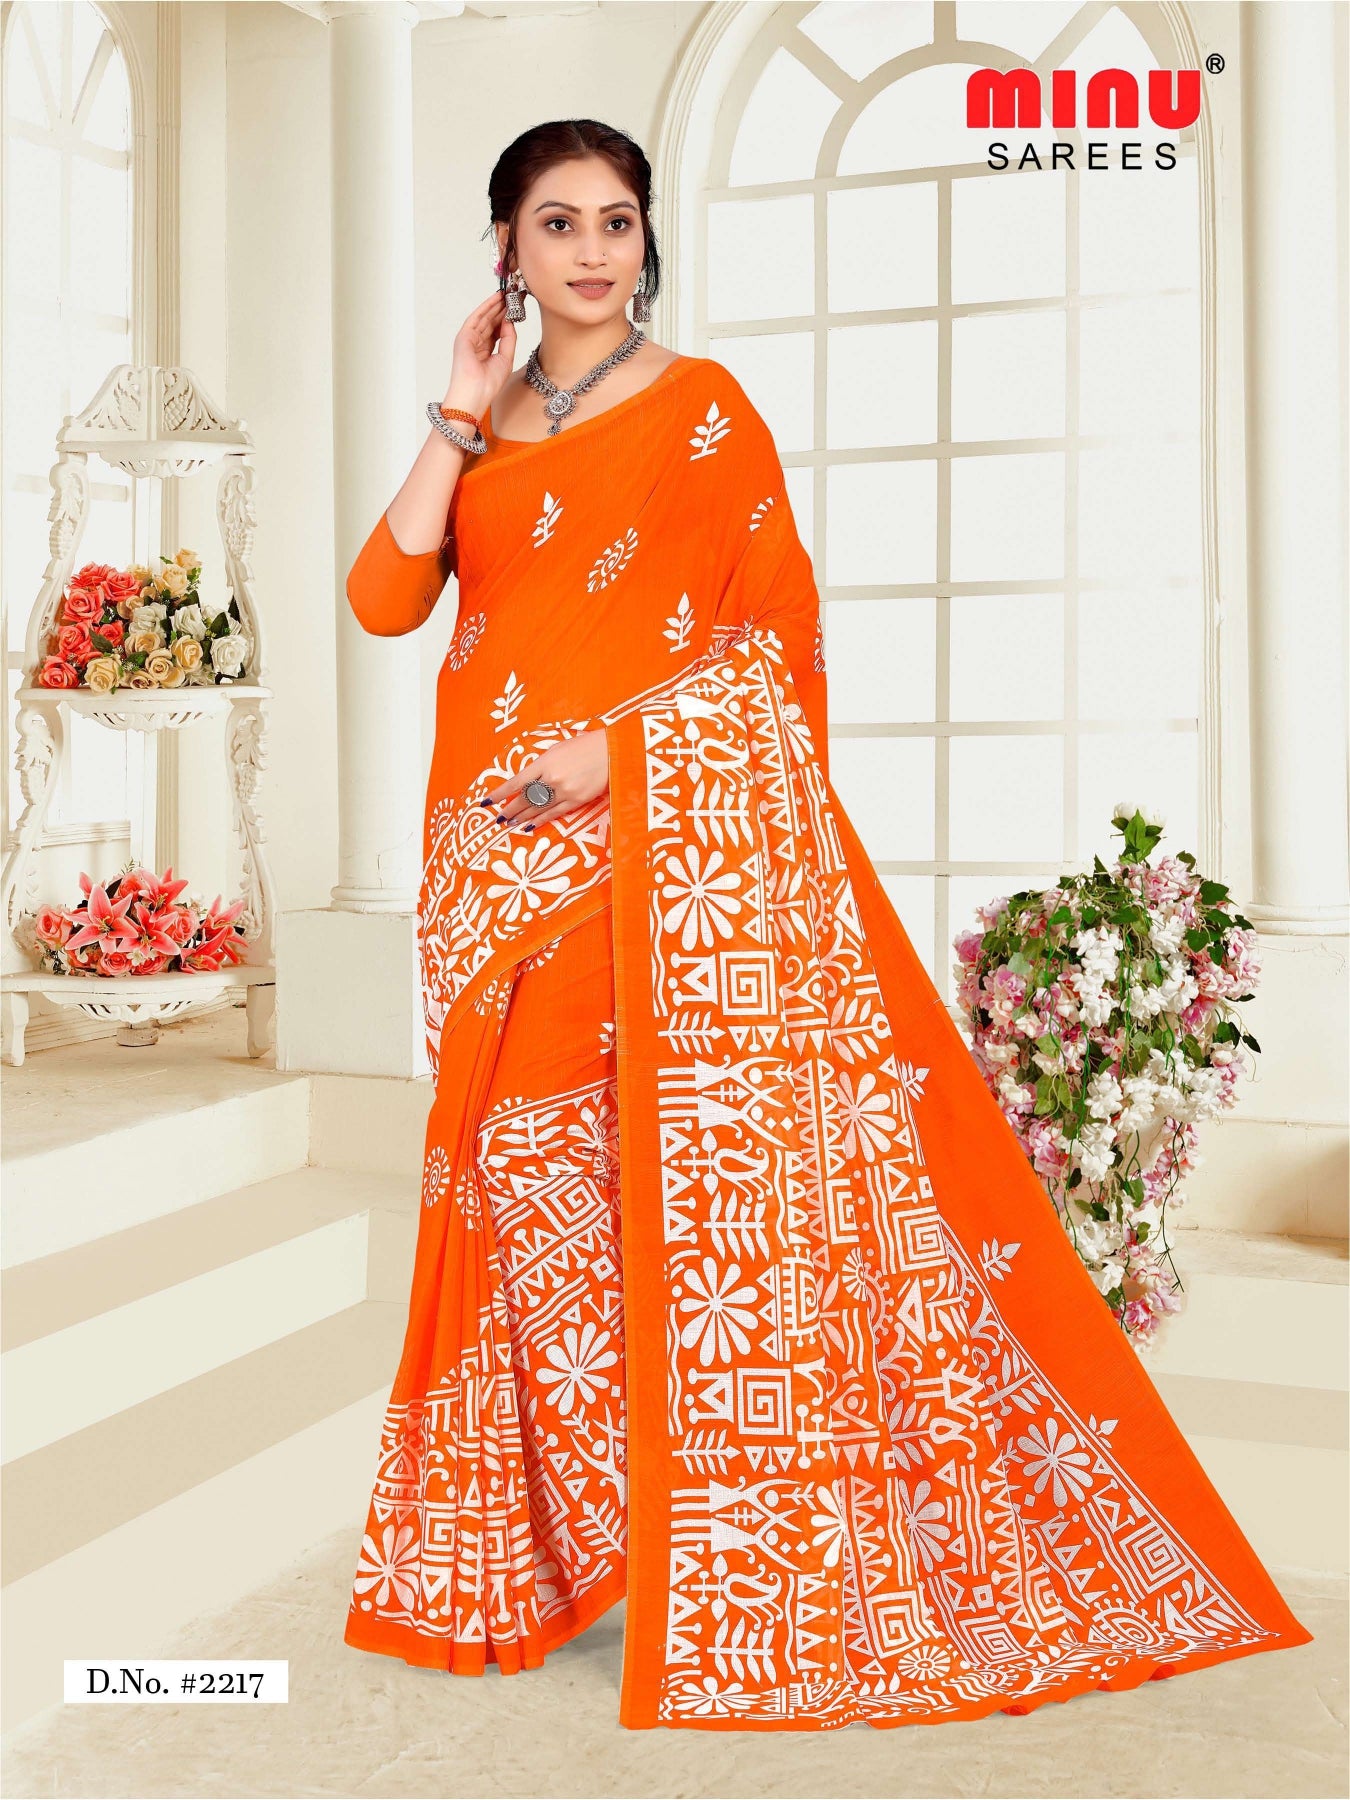 women's printed sarees online image